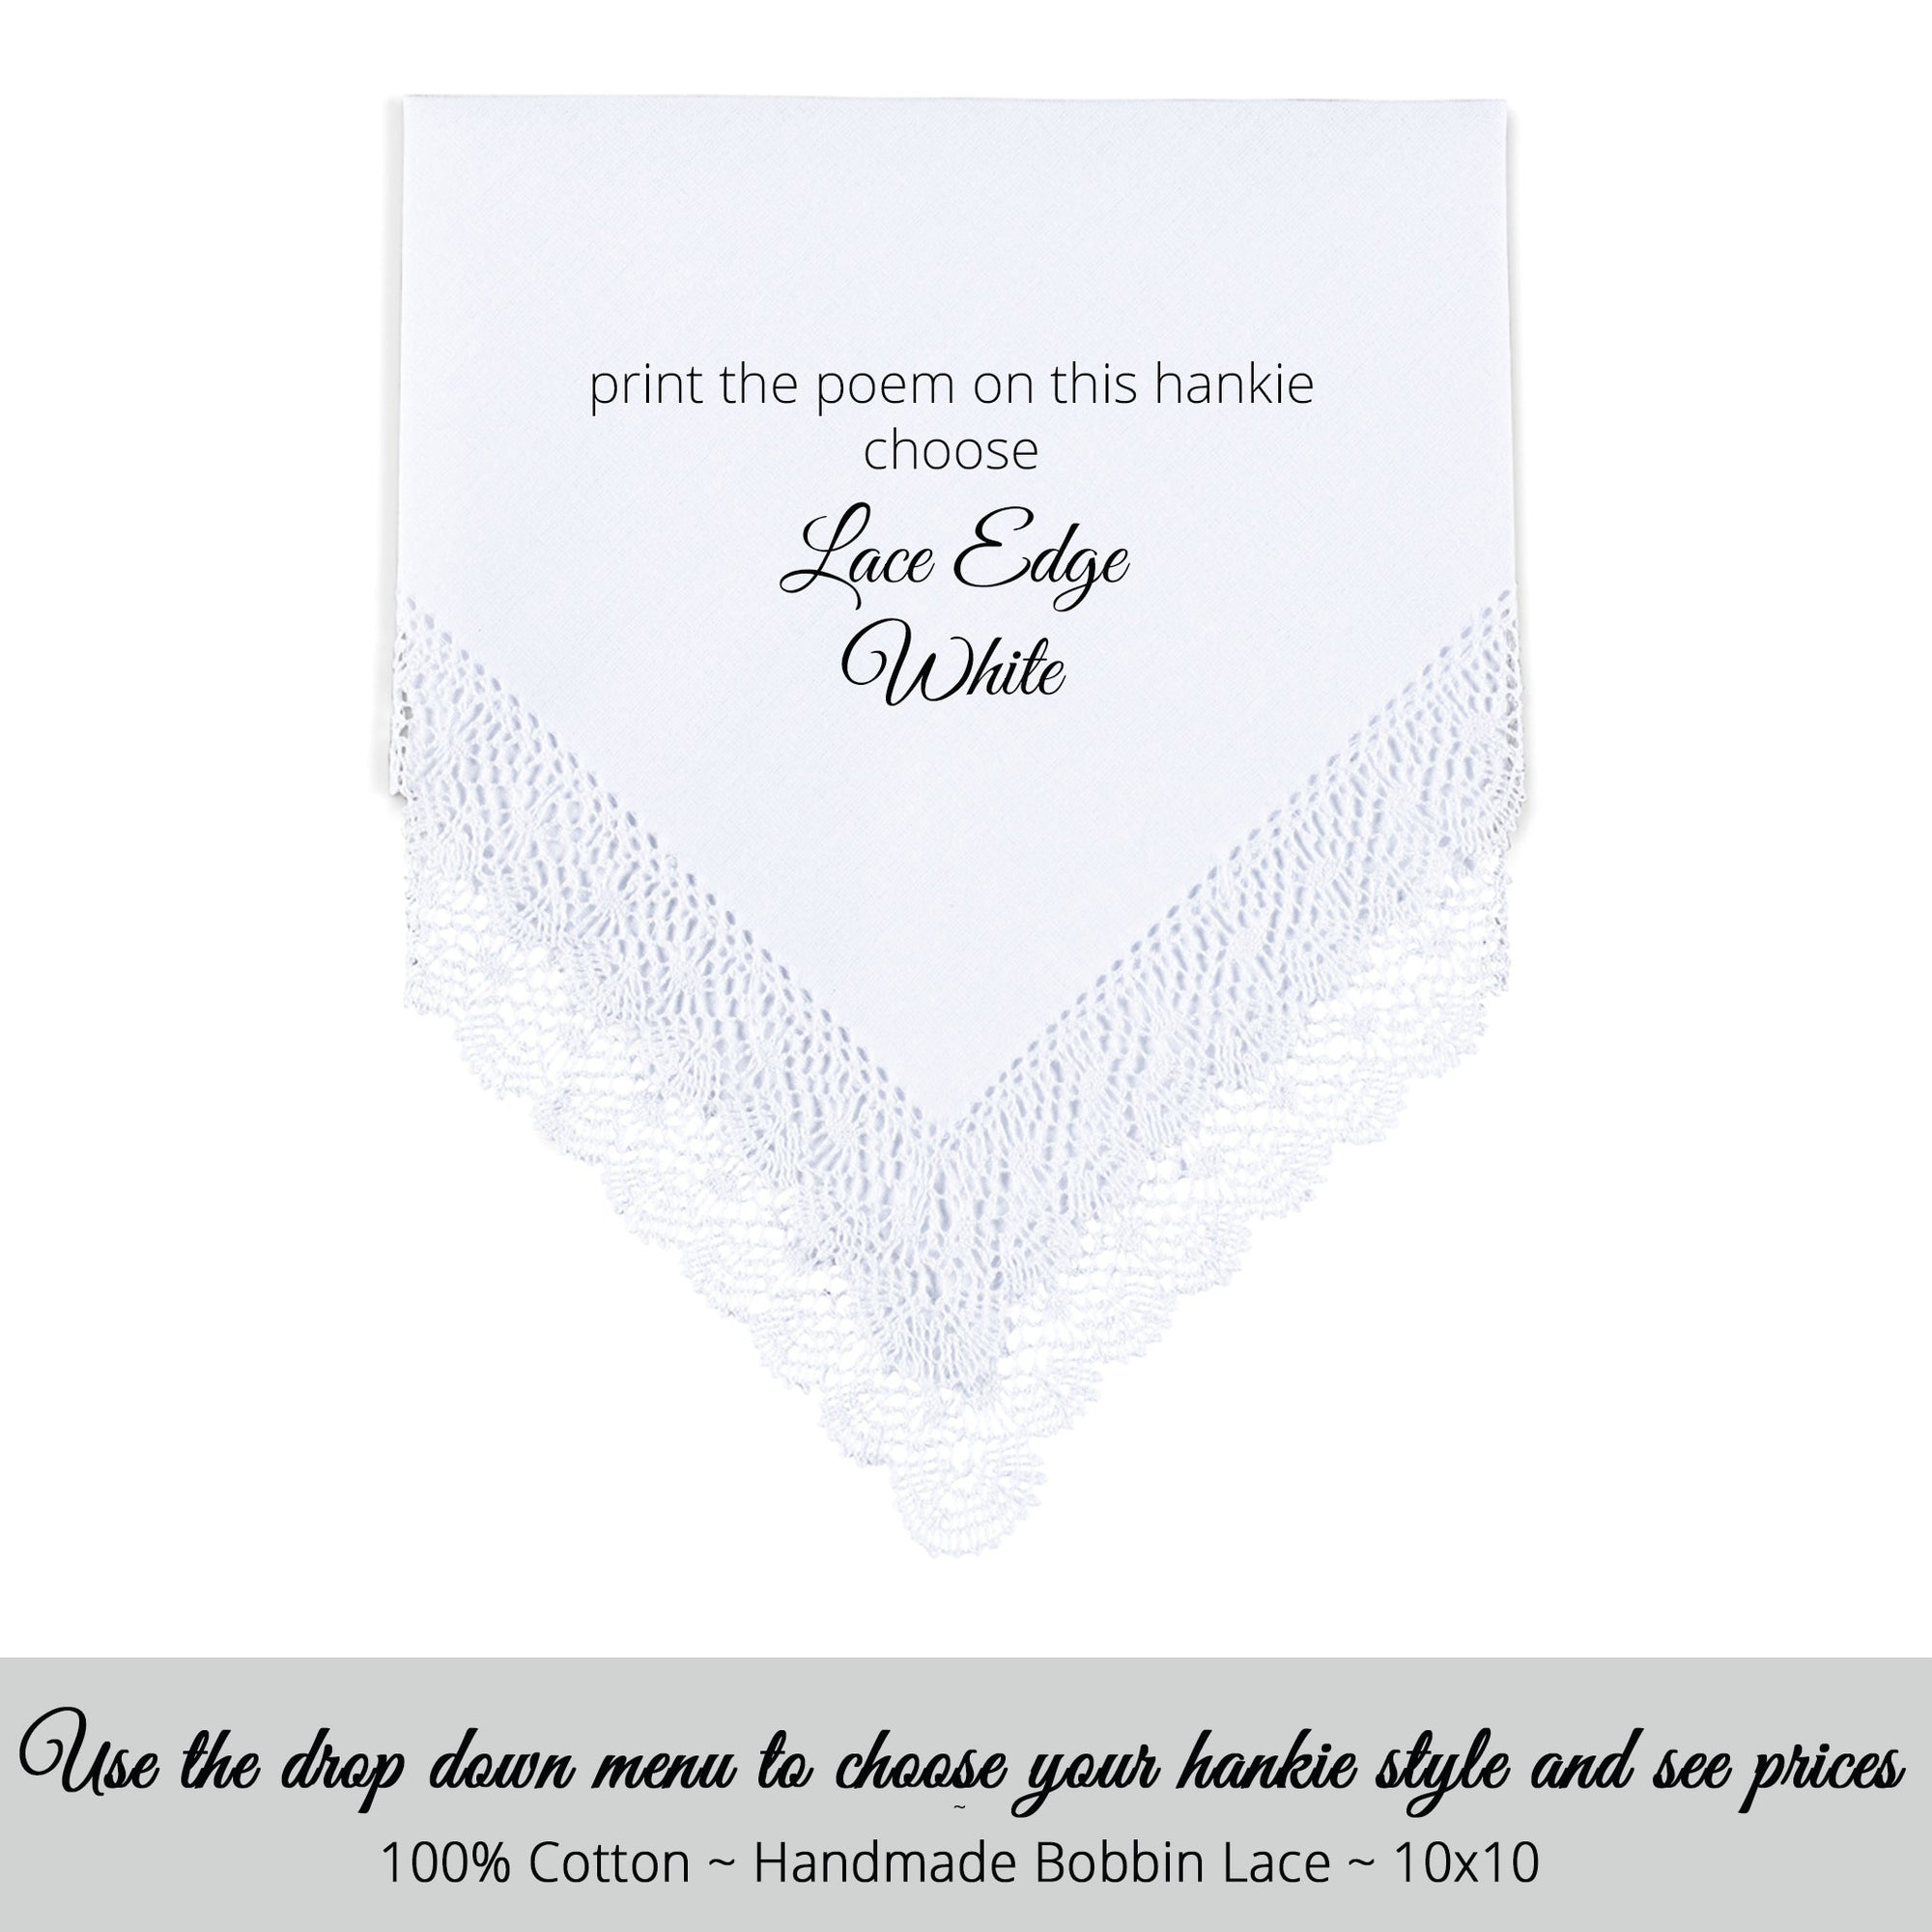 Wedding Handkerchief Scalloped edge white personalized printed poem